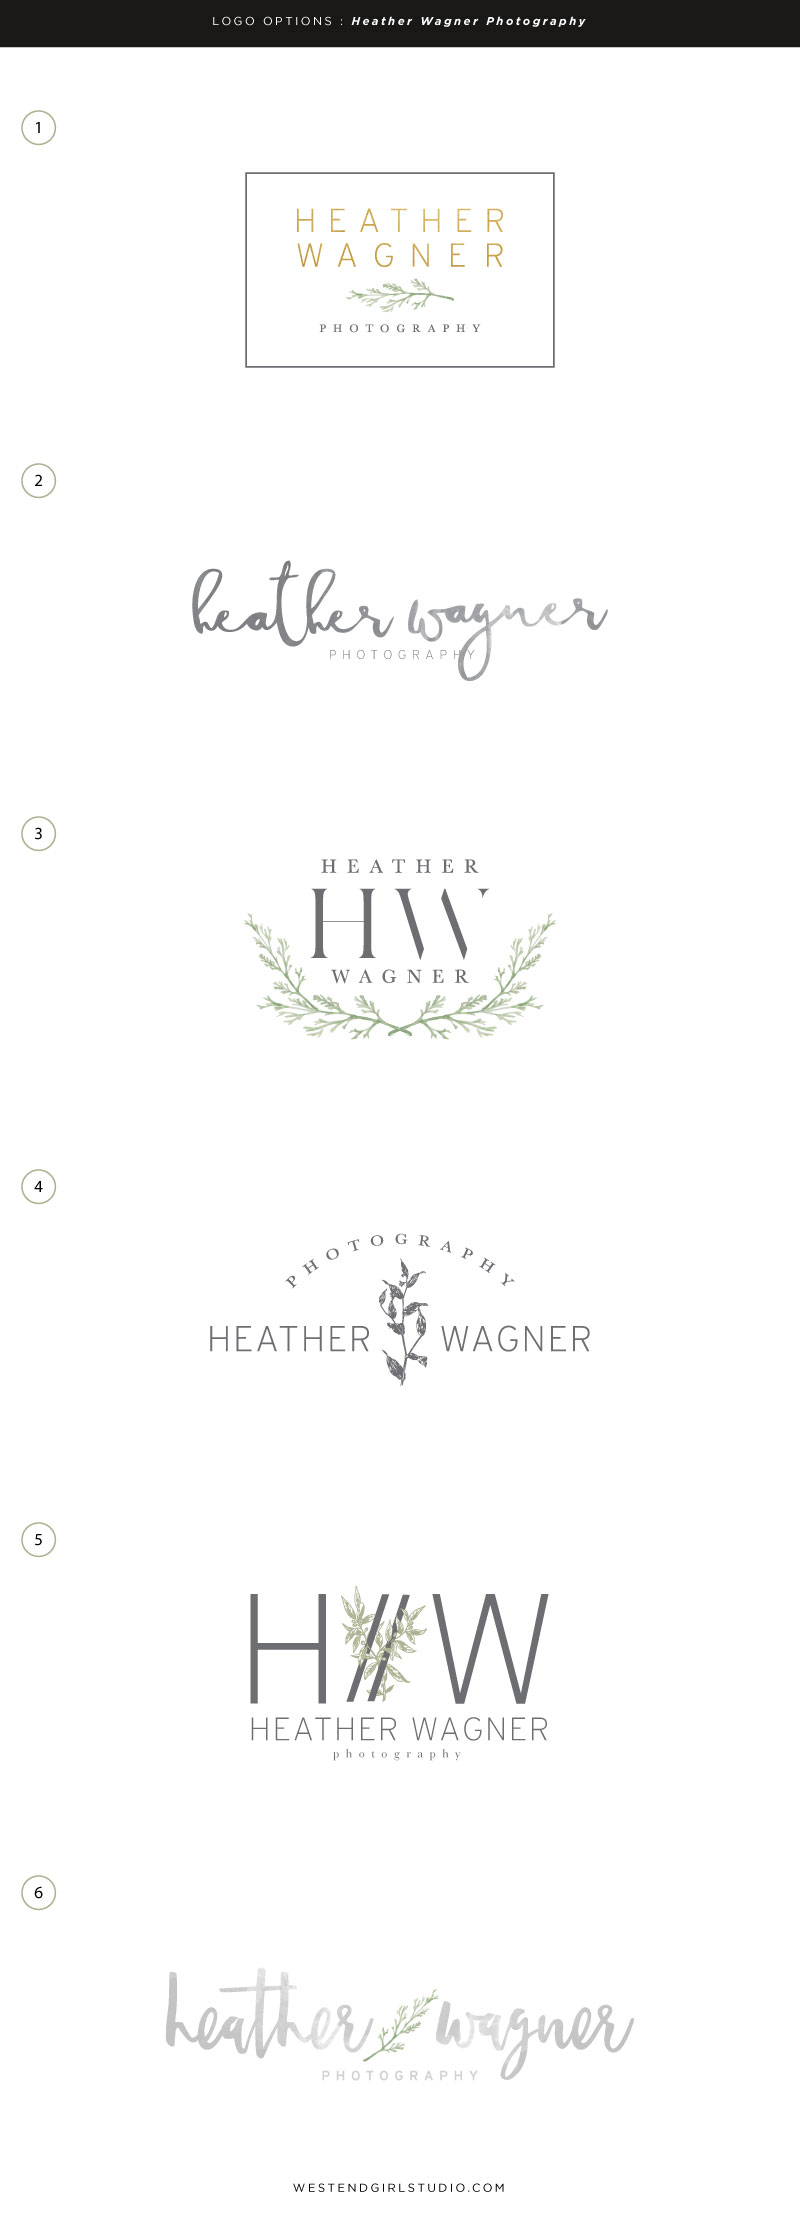 heather-wagoner-options